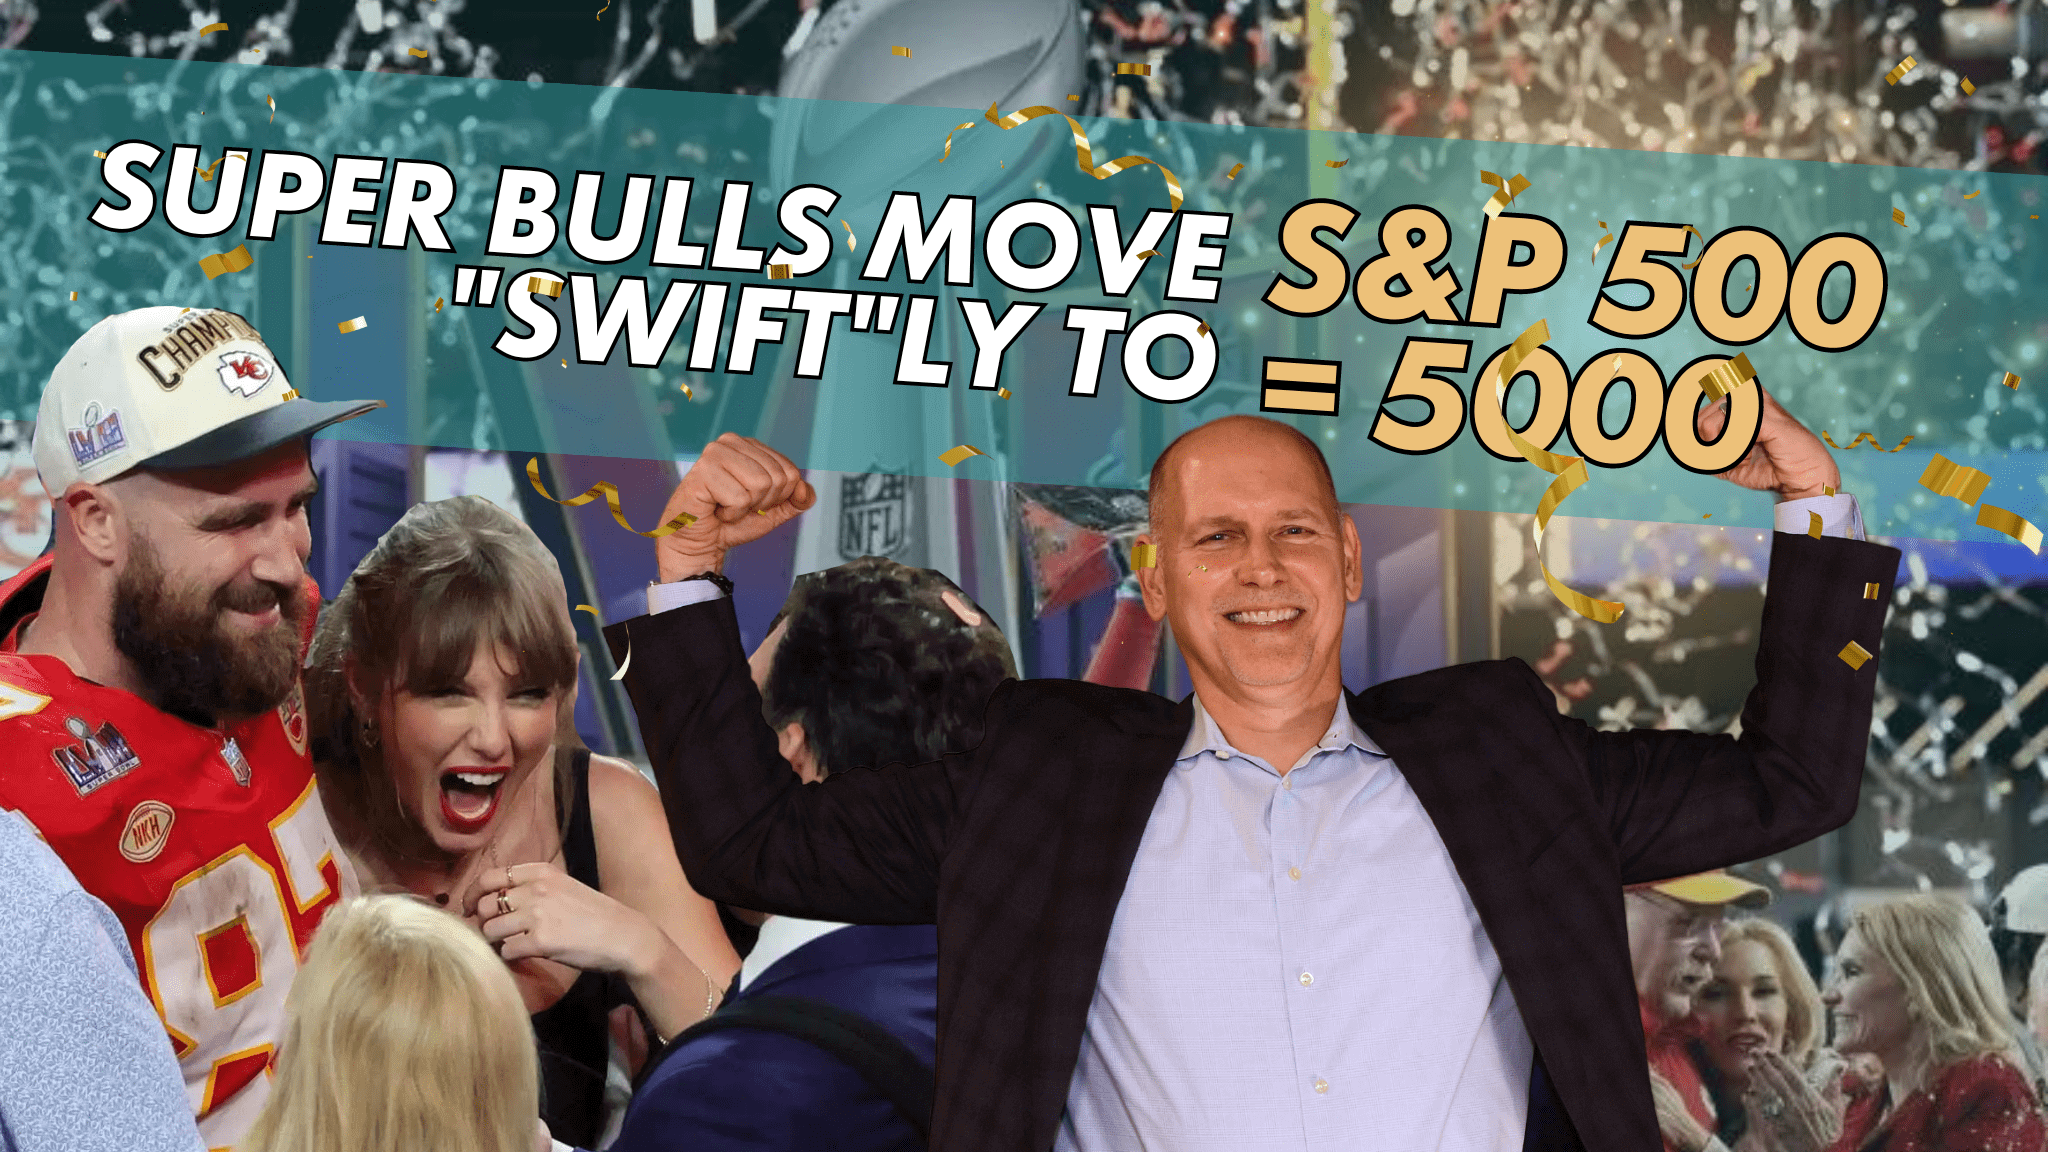 Super bulls move 'swift'ly to S&P 500 = 5000